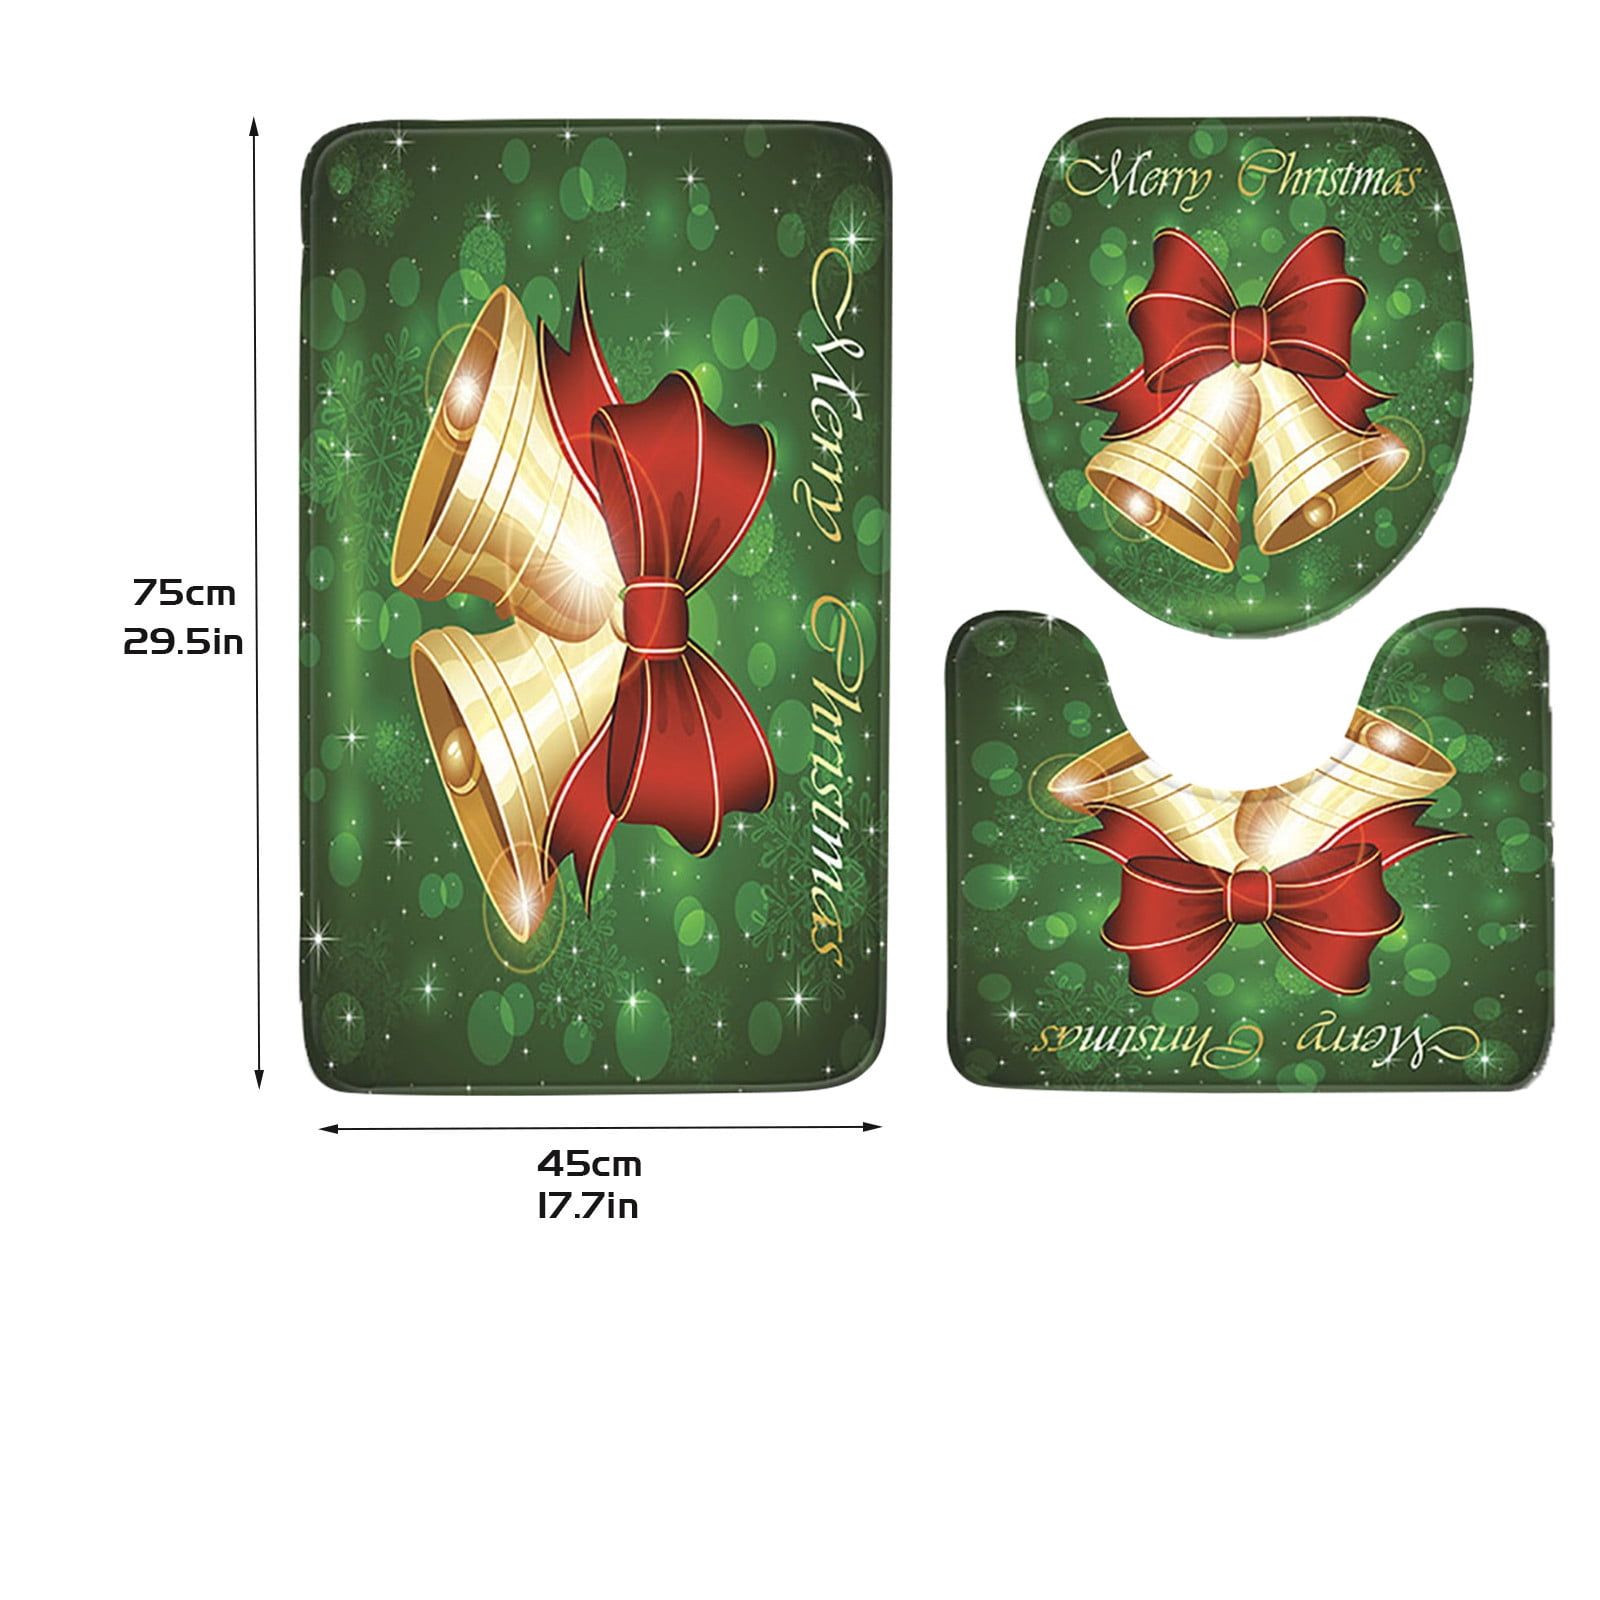 3pcs Christmas Non-Slip Bath Mat Bathroom Kitchen Carpet Doormats Decor Gift US 